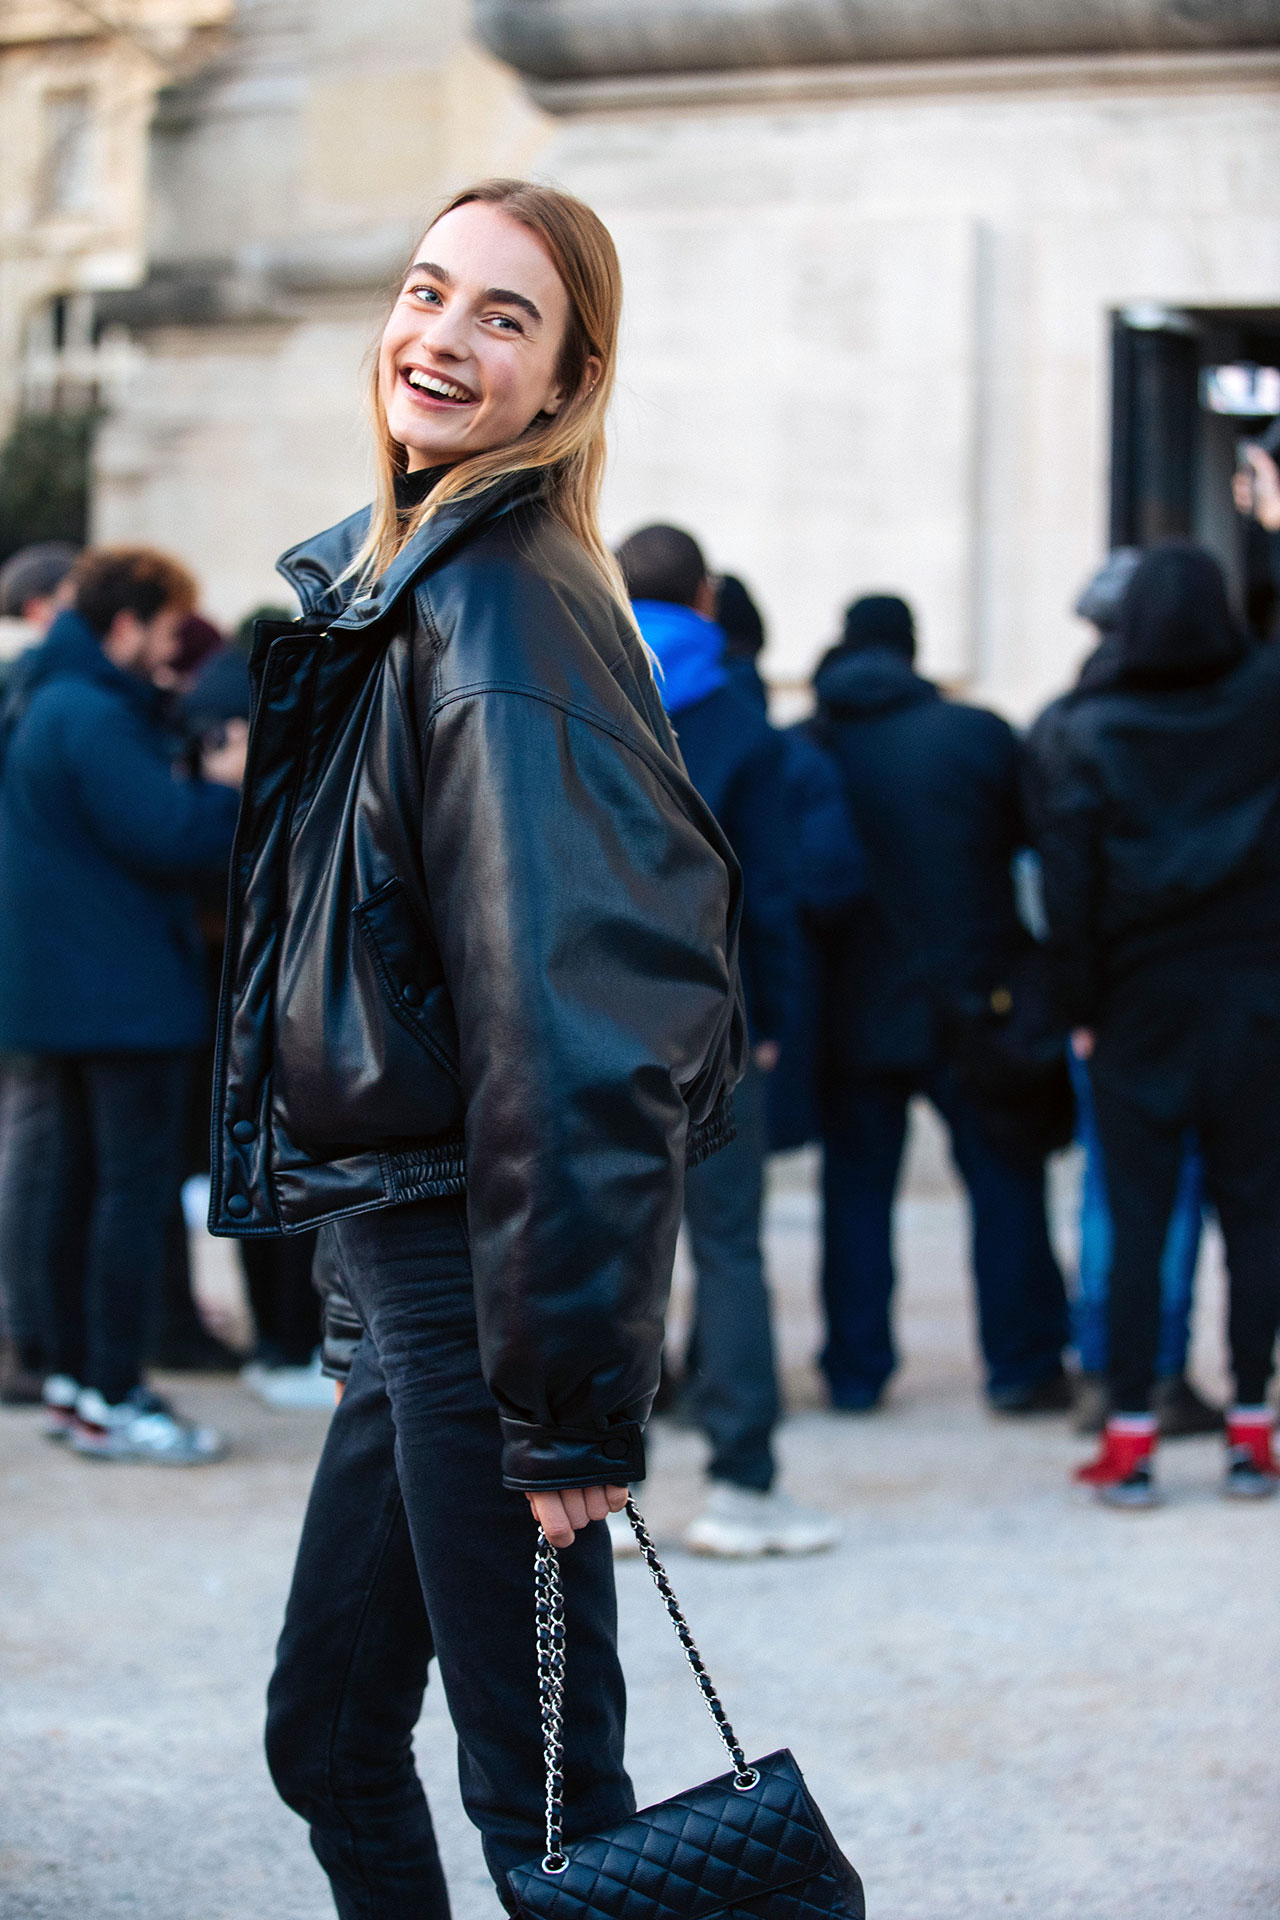 Maartje Verhoef at Paris Couture Spring 2020 Fashion Week